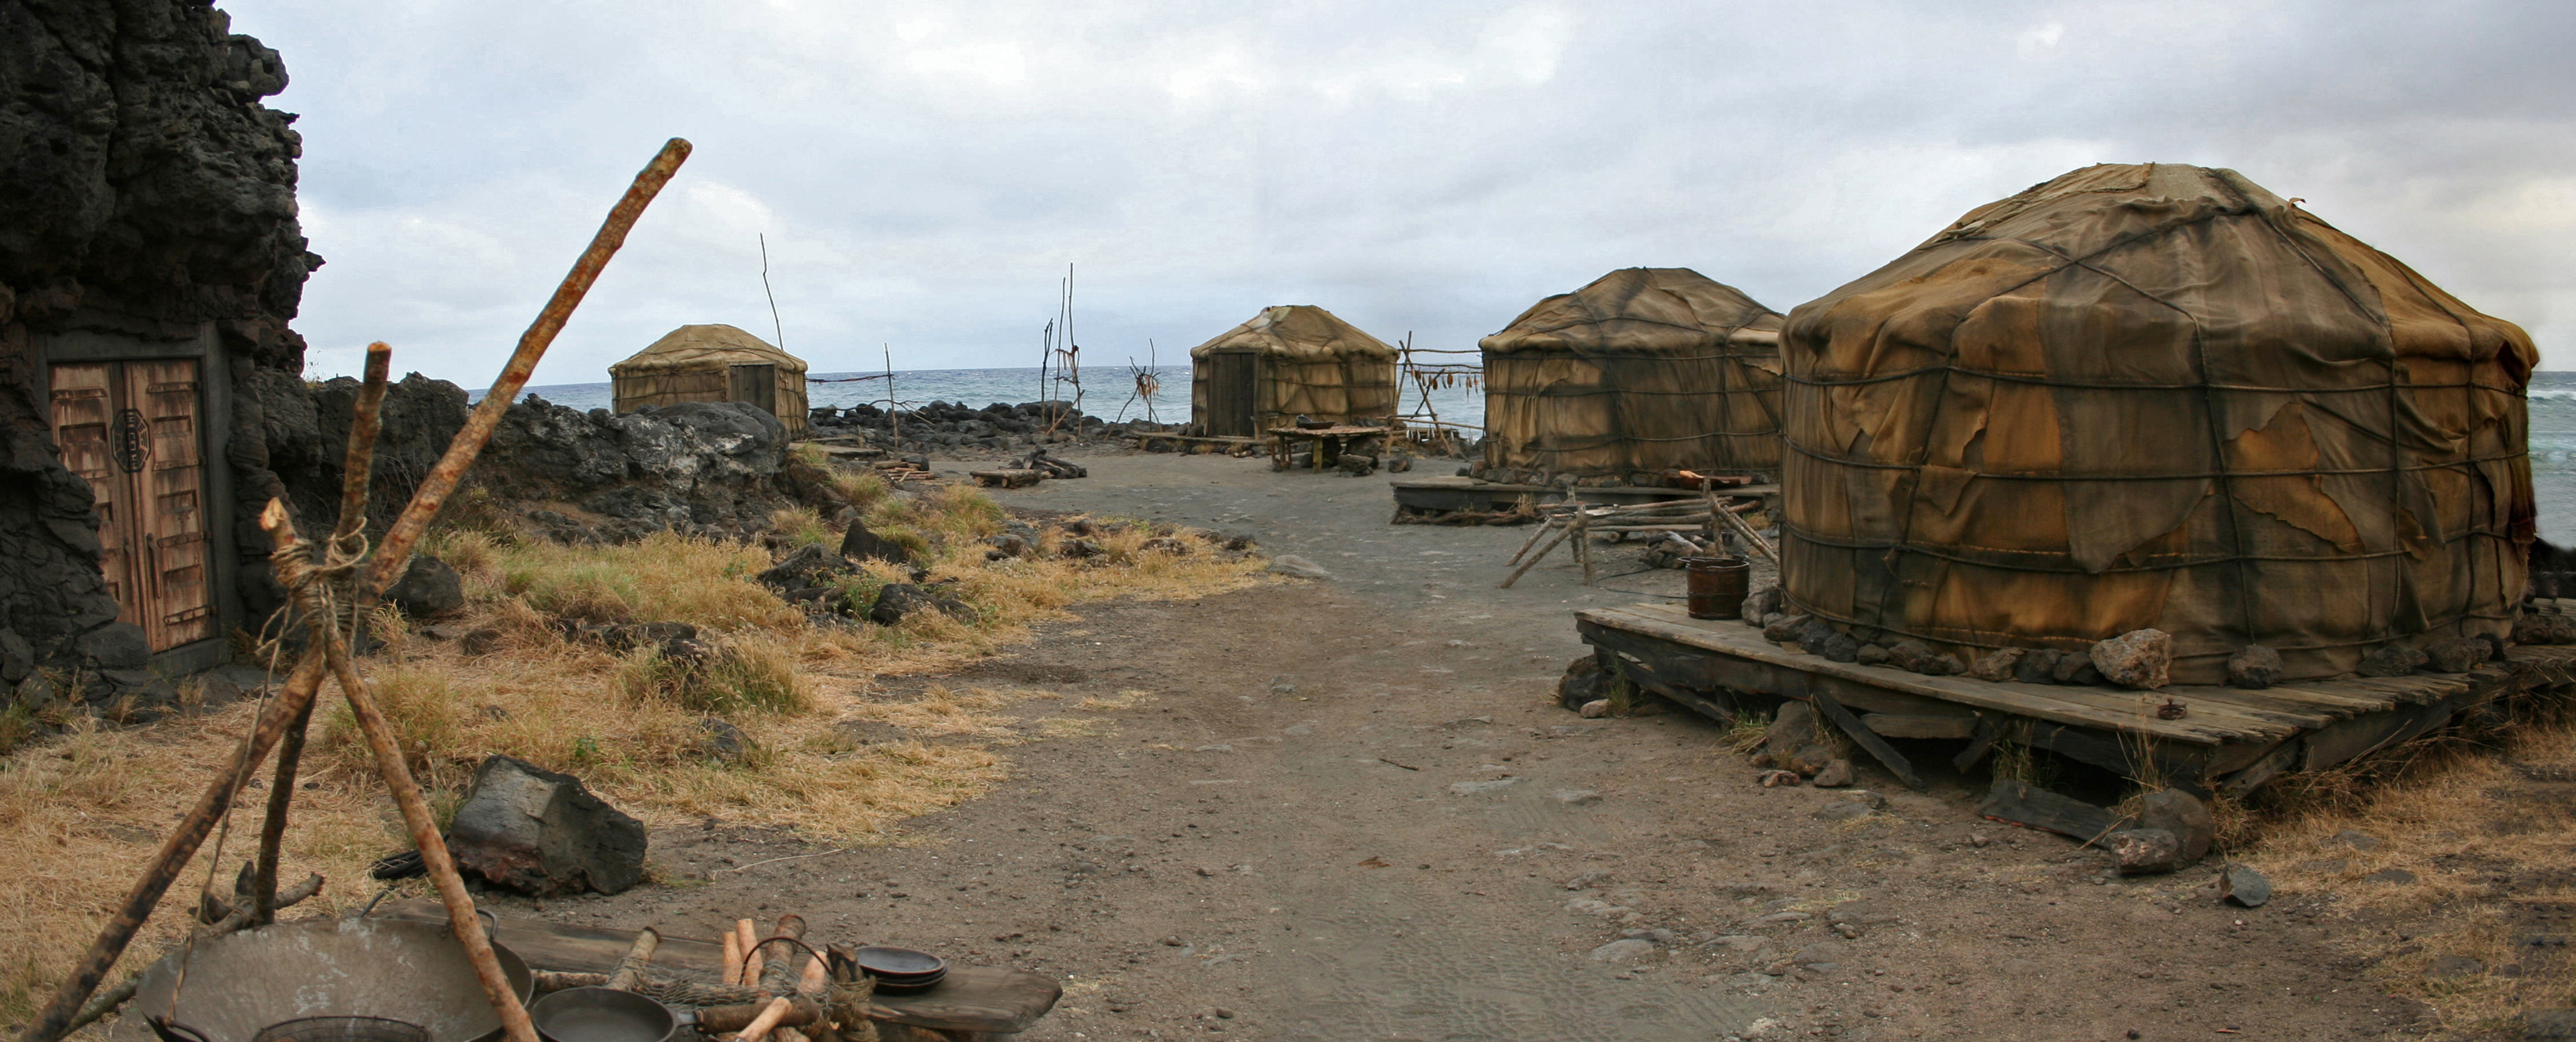 Decoy yurt village. Set built on location for 